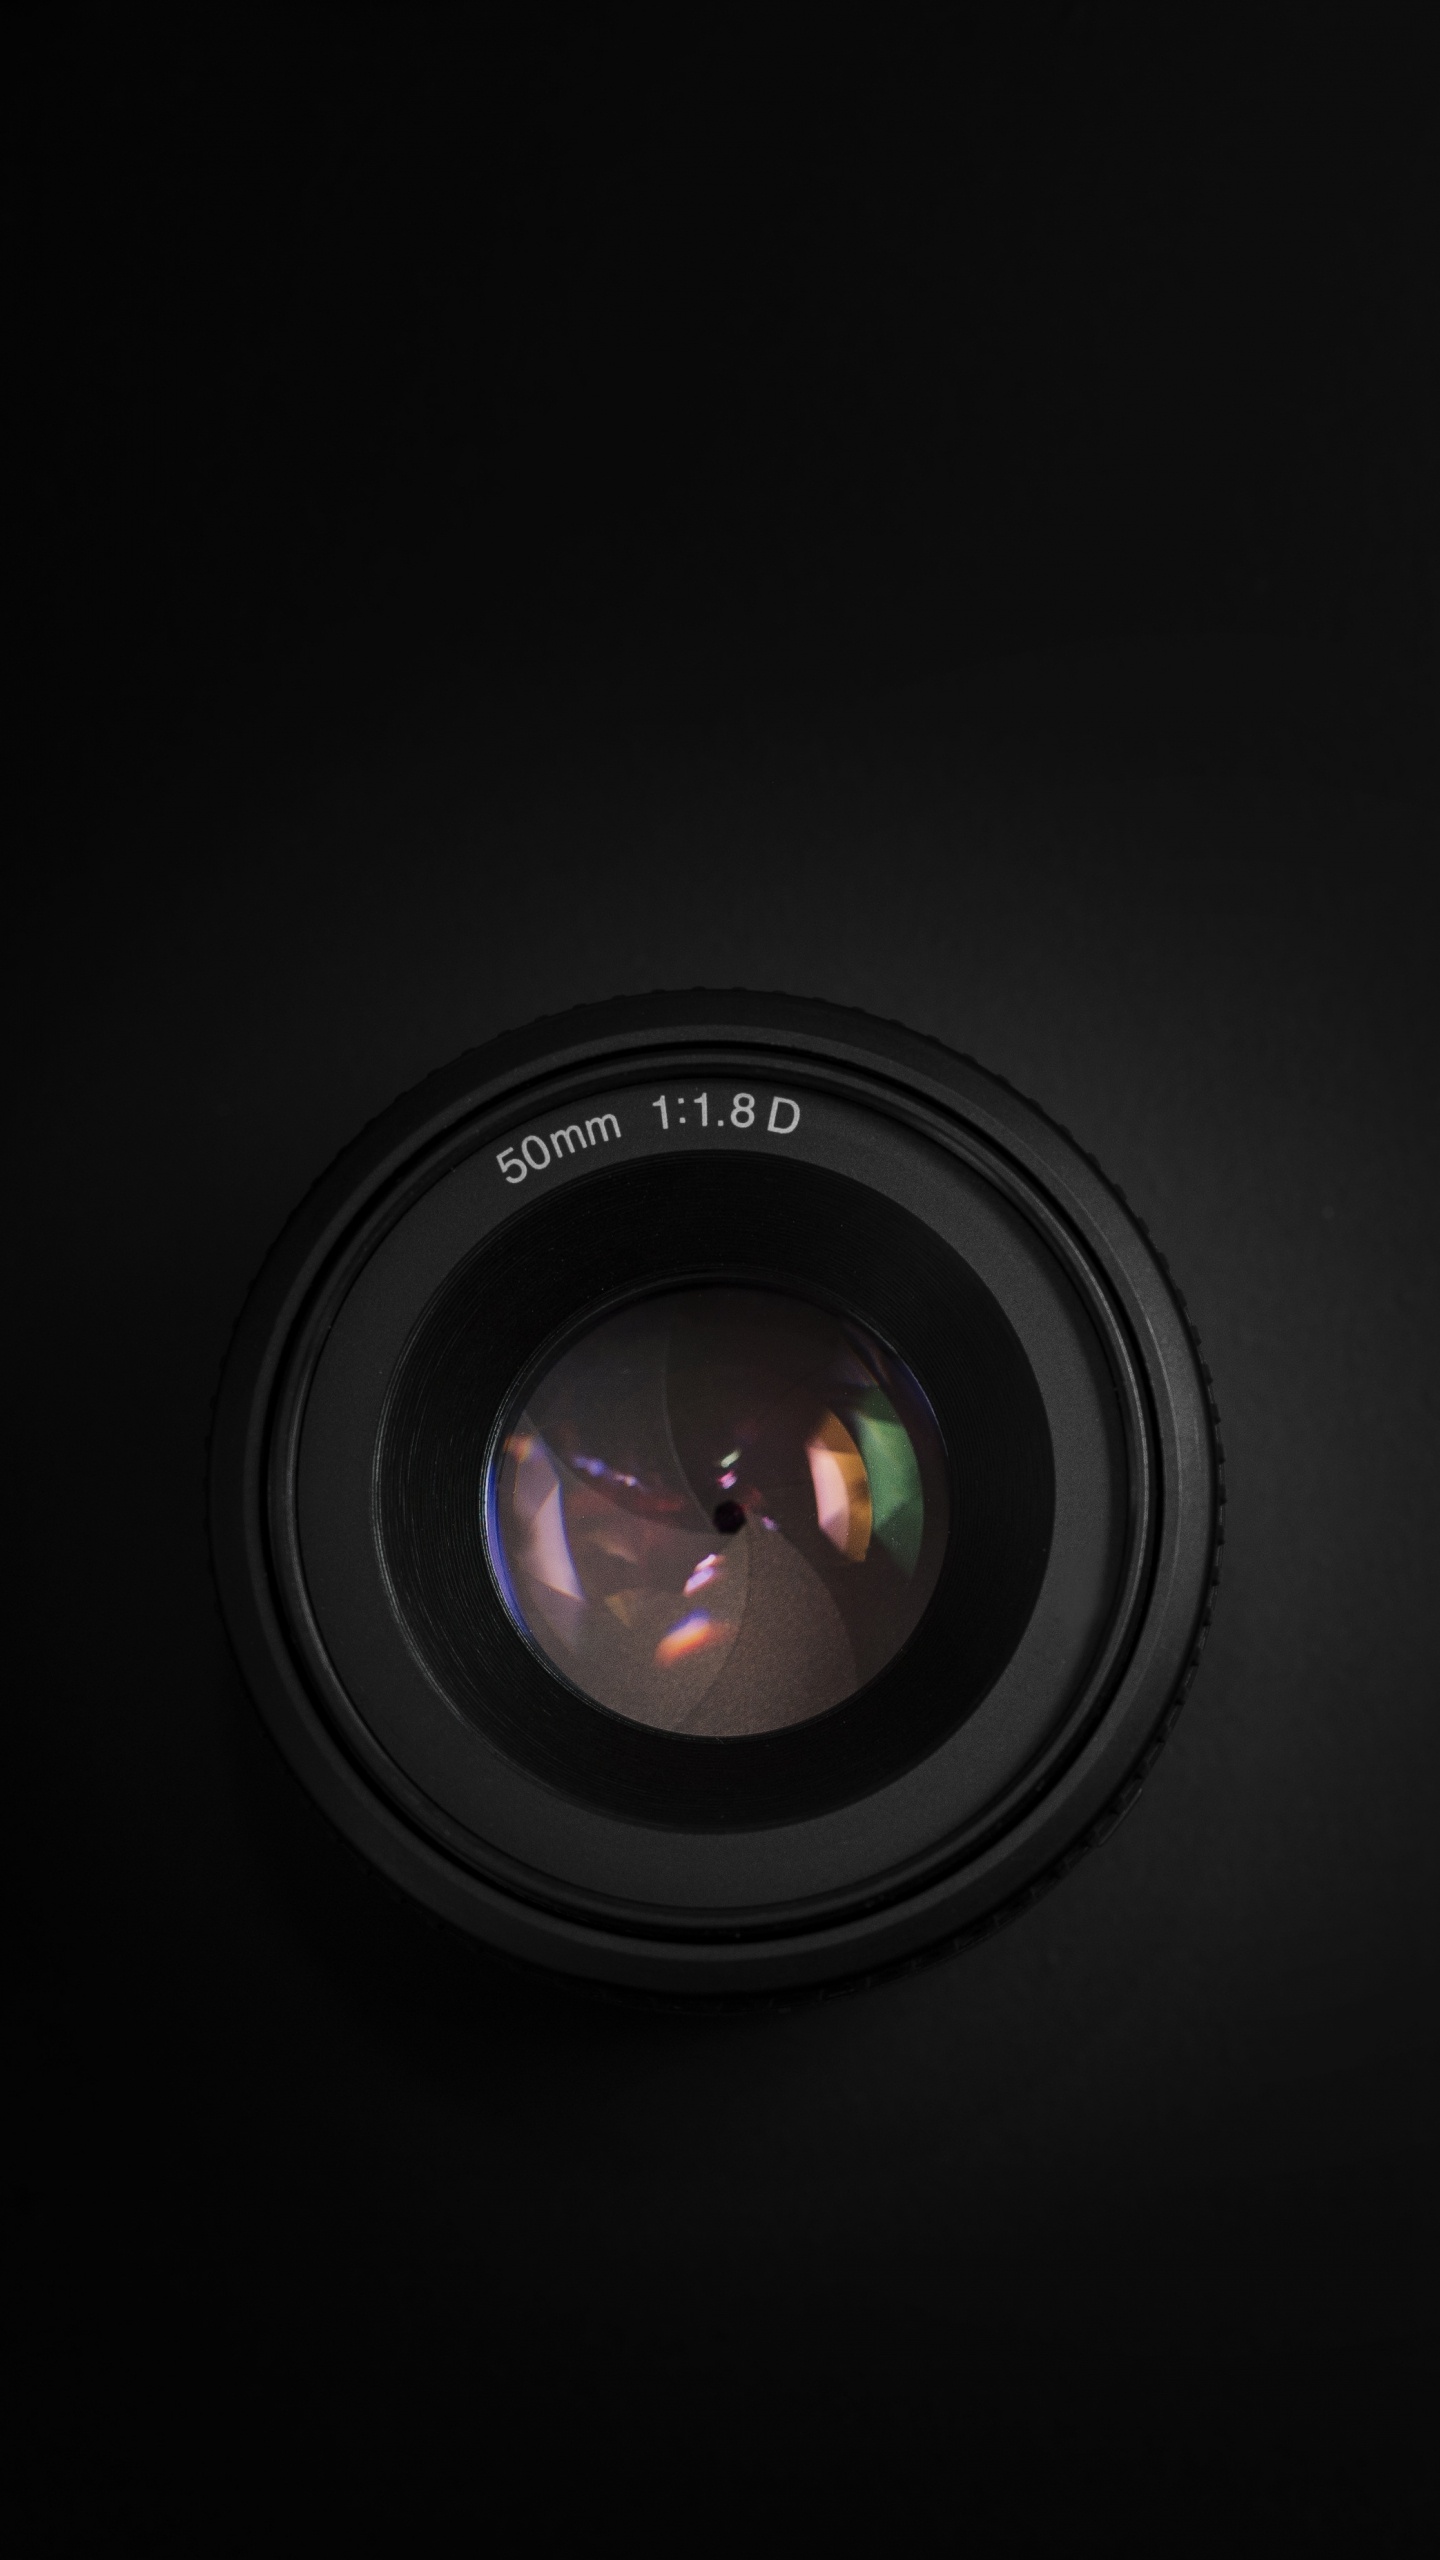 Black Camera Lens on Black Surface. Wallpaper in 1440x2560 Resolution